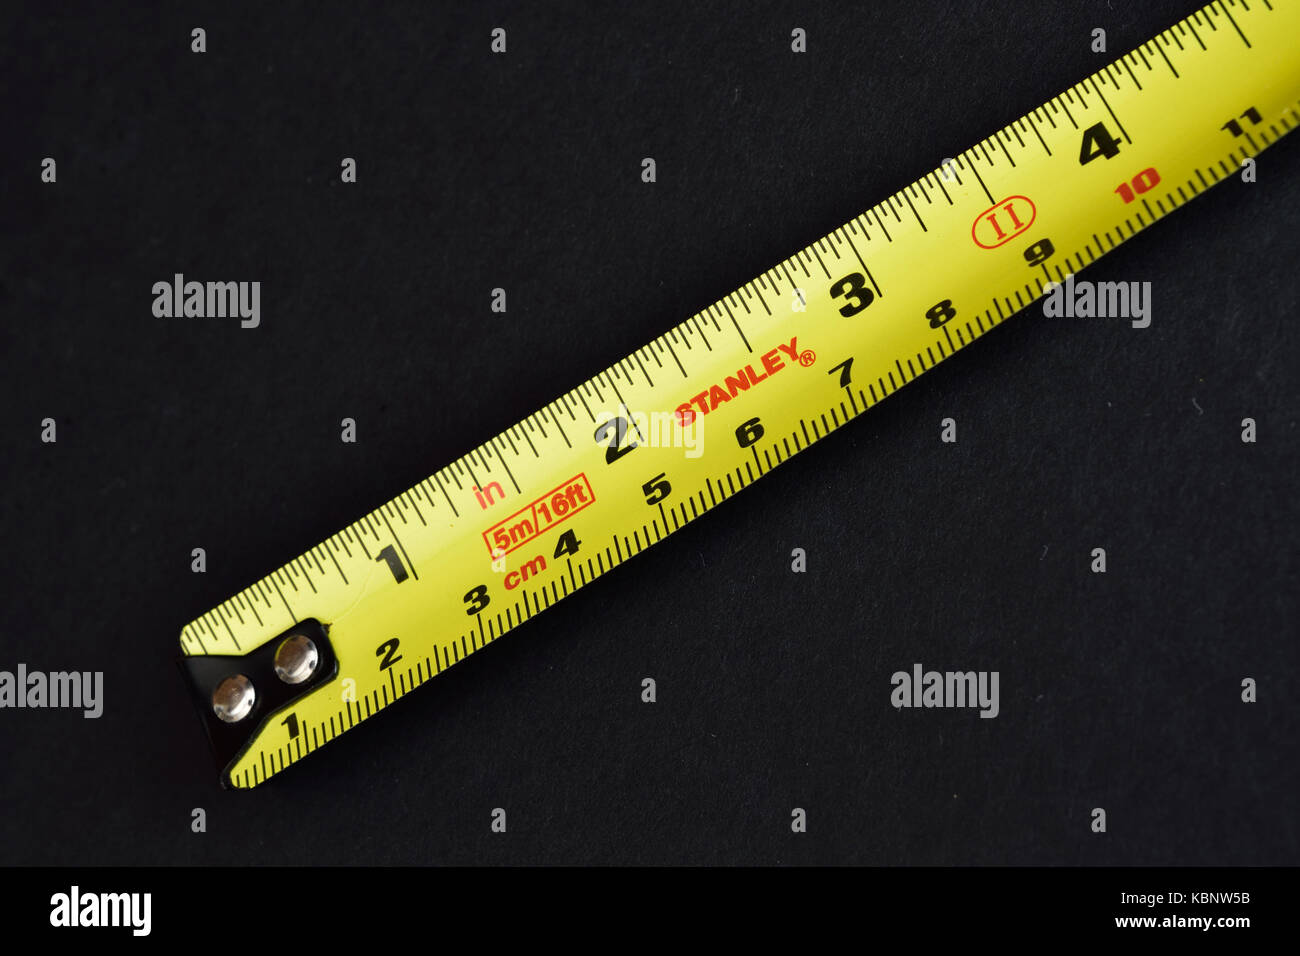 https://c8.alamy.com/comp/KBNW5B/yellow-stanley-steel-tape-measure-on-black-background-KBNW5B.jpg